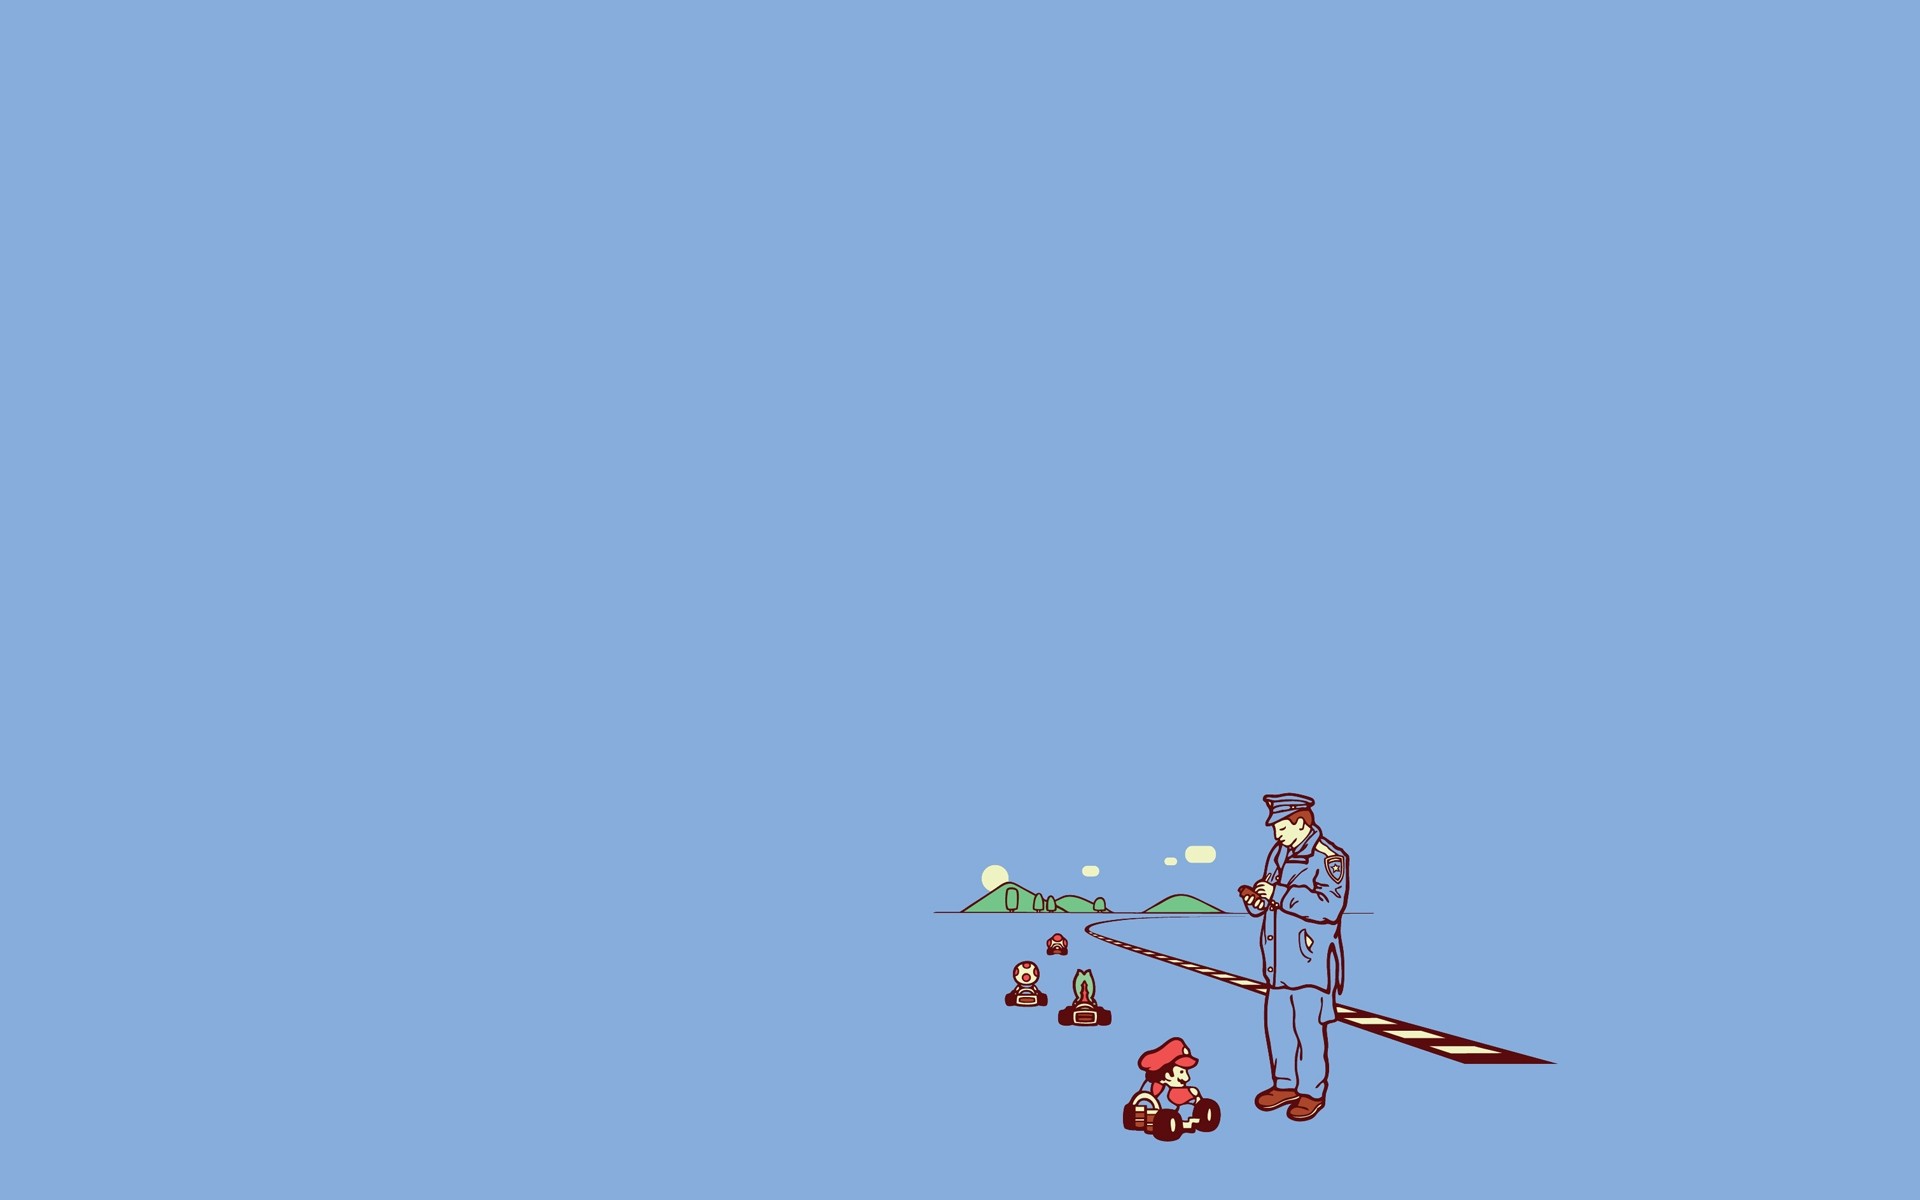 General 1920x1200 minimalism humor Super Mario Kart video game art video games simple background blue background